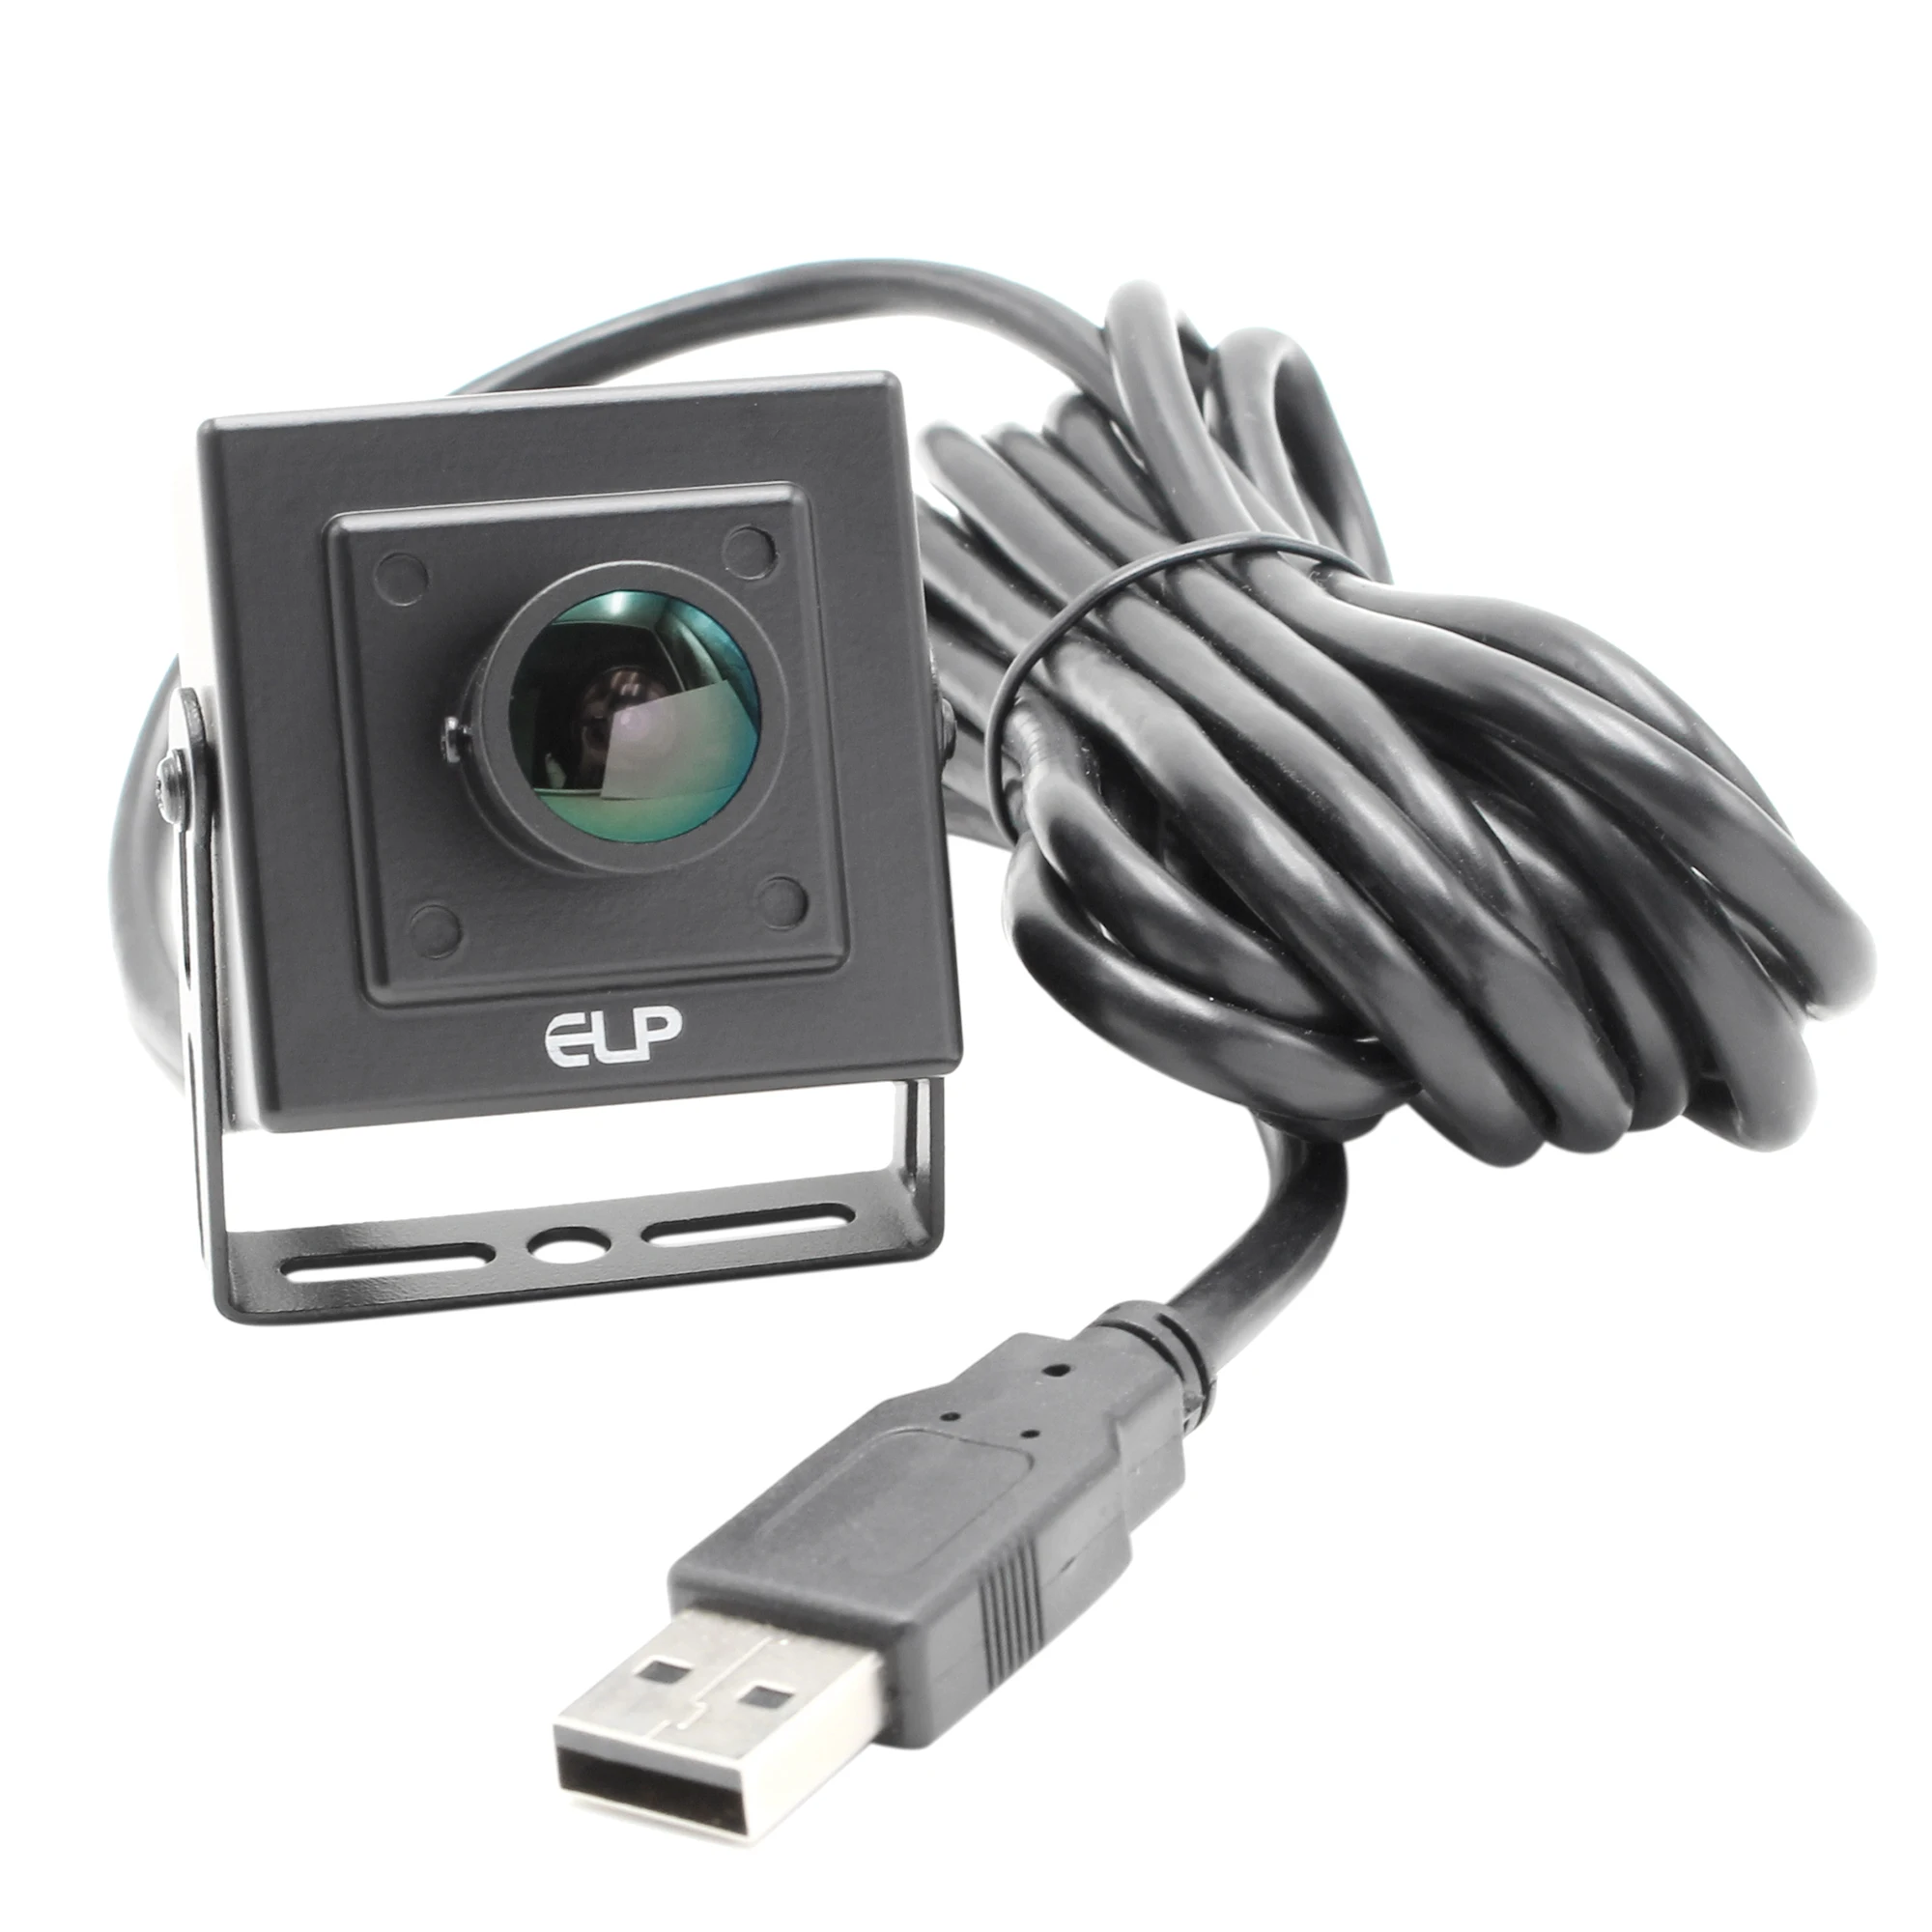 

2MP 1080P HD USB Camera Wide Angle IMX323 H.264 Video Cam UVC Low Light 0.01lux Mini Industrial Machine Vision USB Webcam